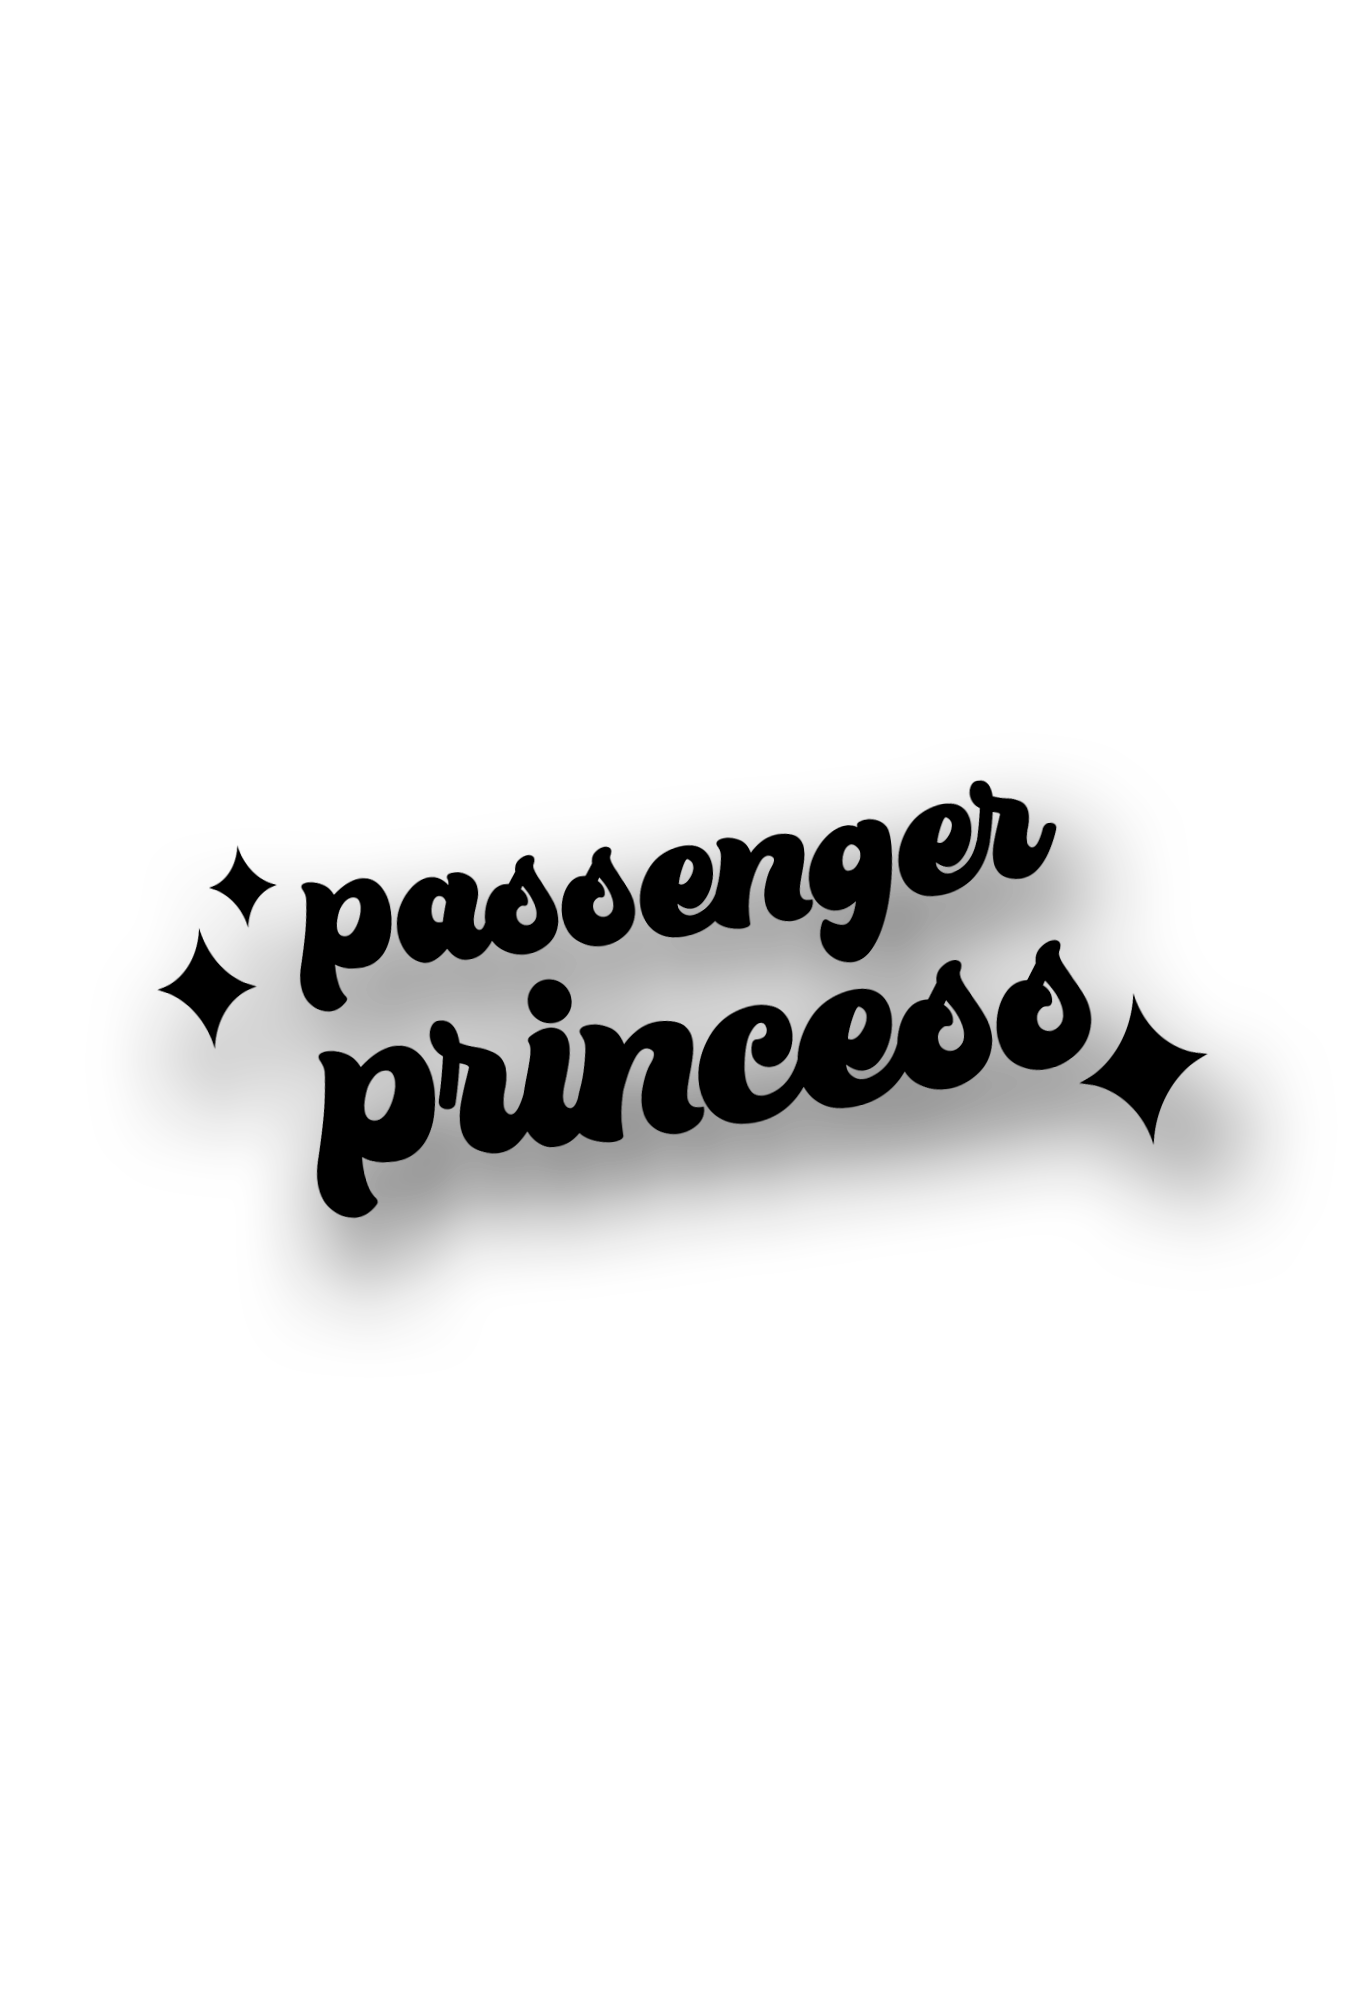 ''Passenger princess'' - Plotted Vinyl Sticker